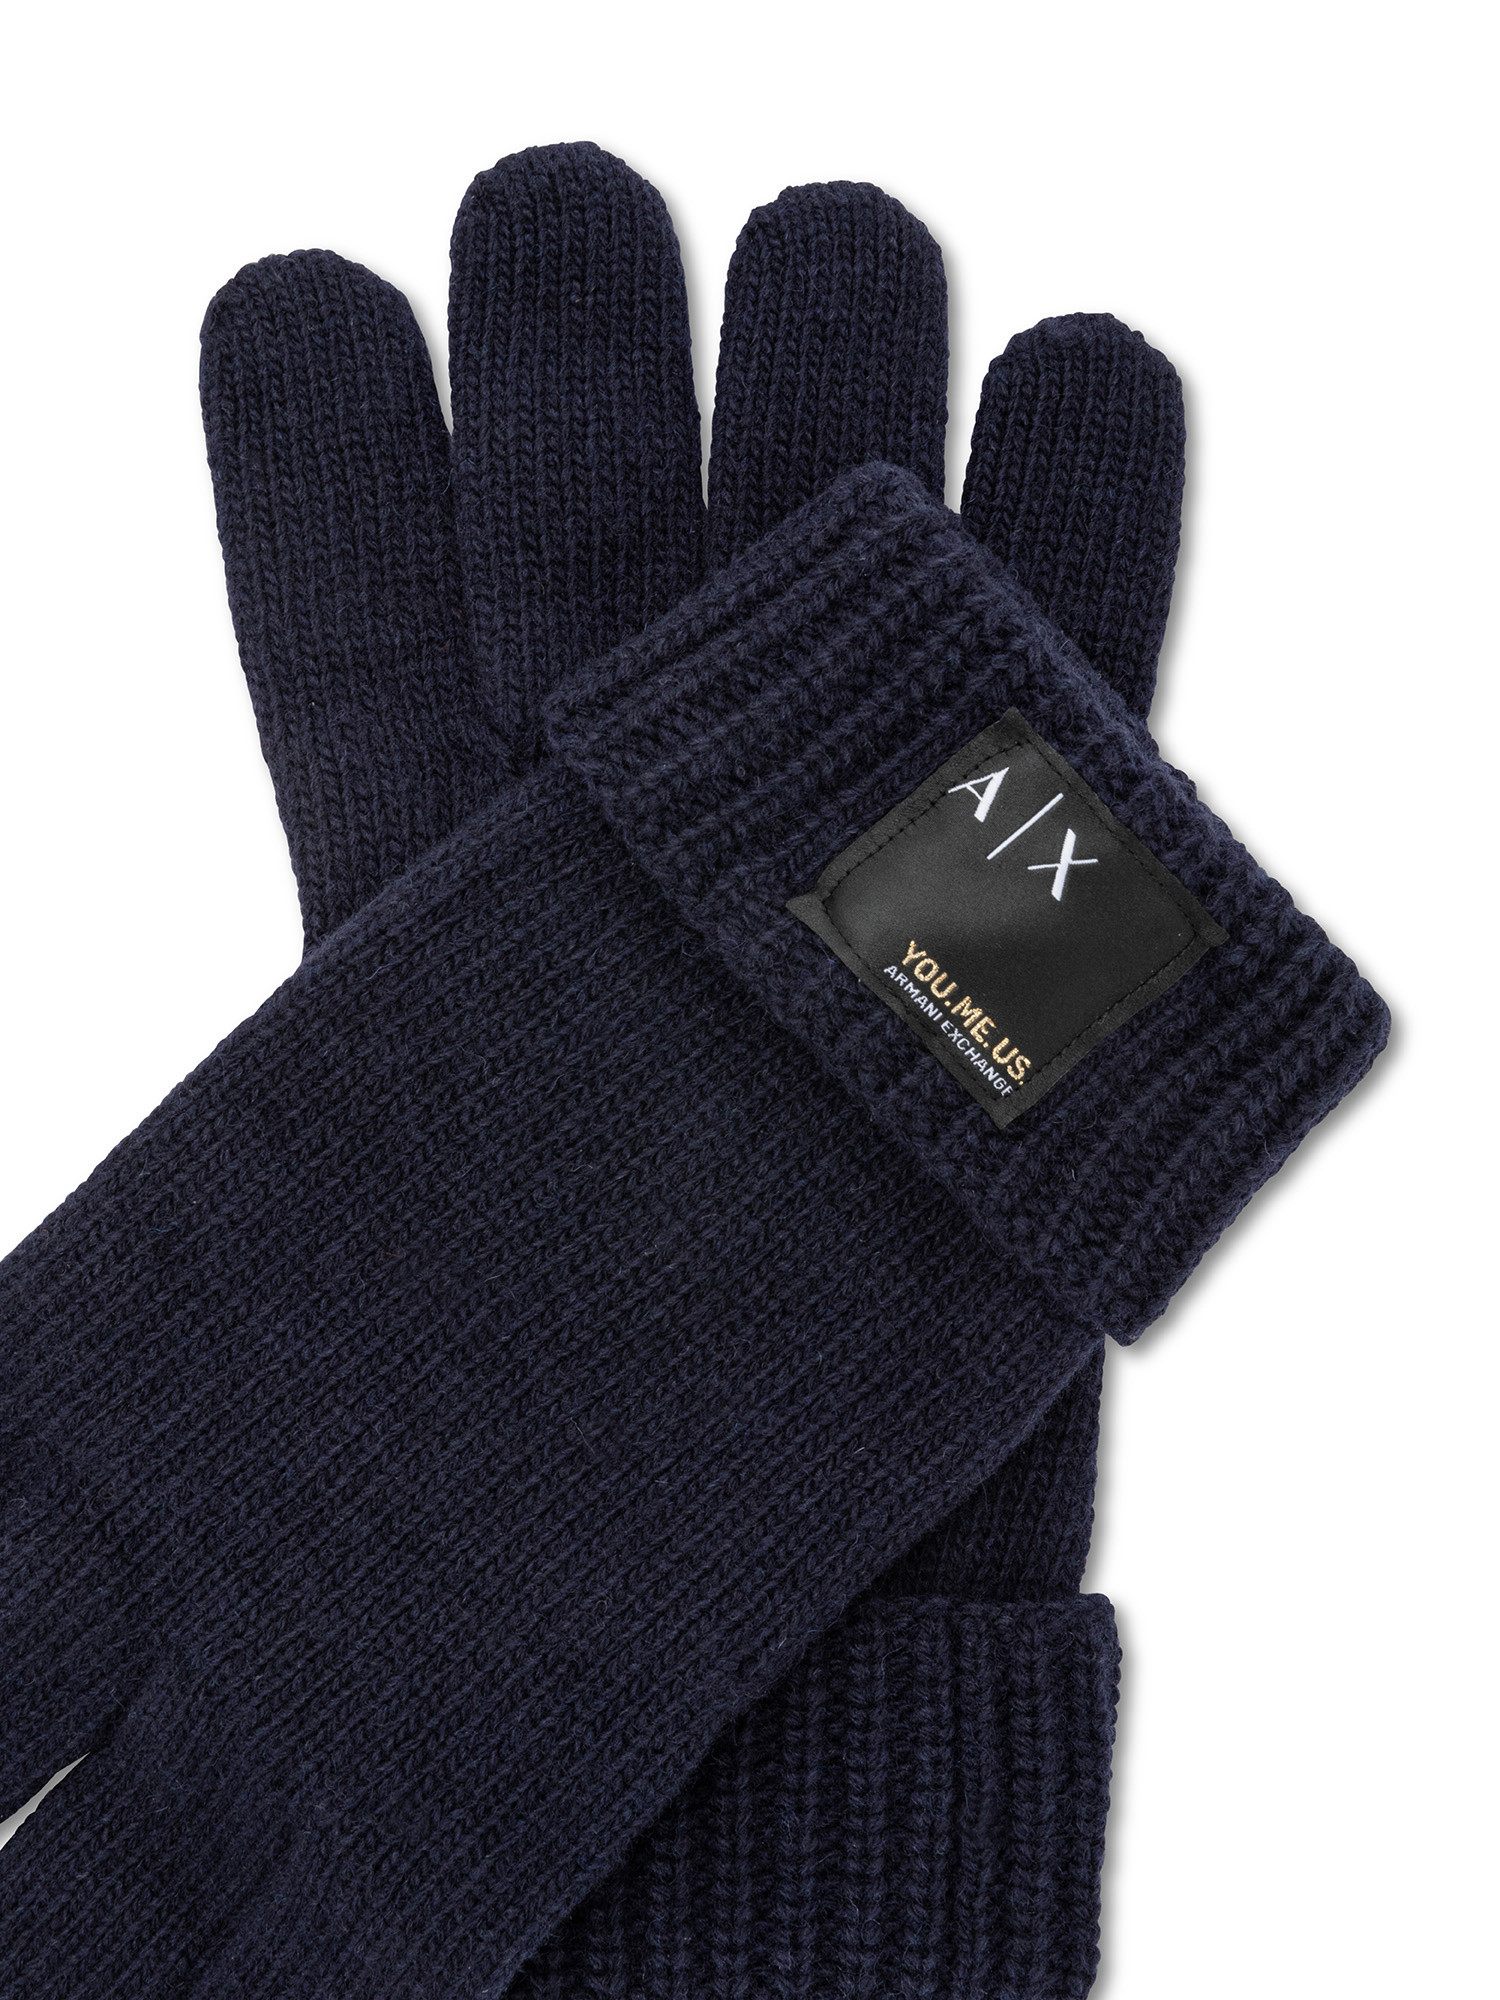 Armani Exchange - Gloves in recycled wool blend, Dark Blue, large image number 1